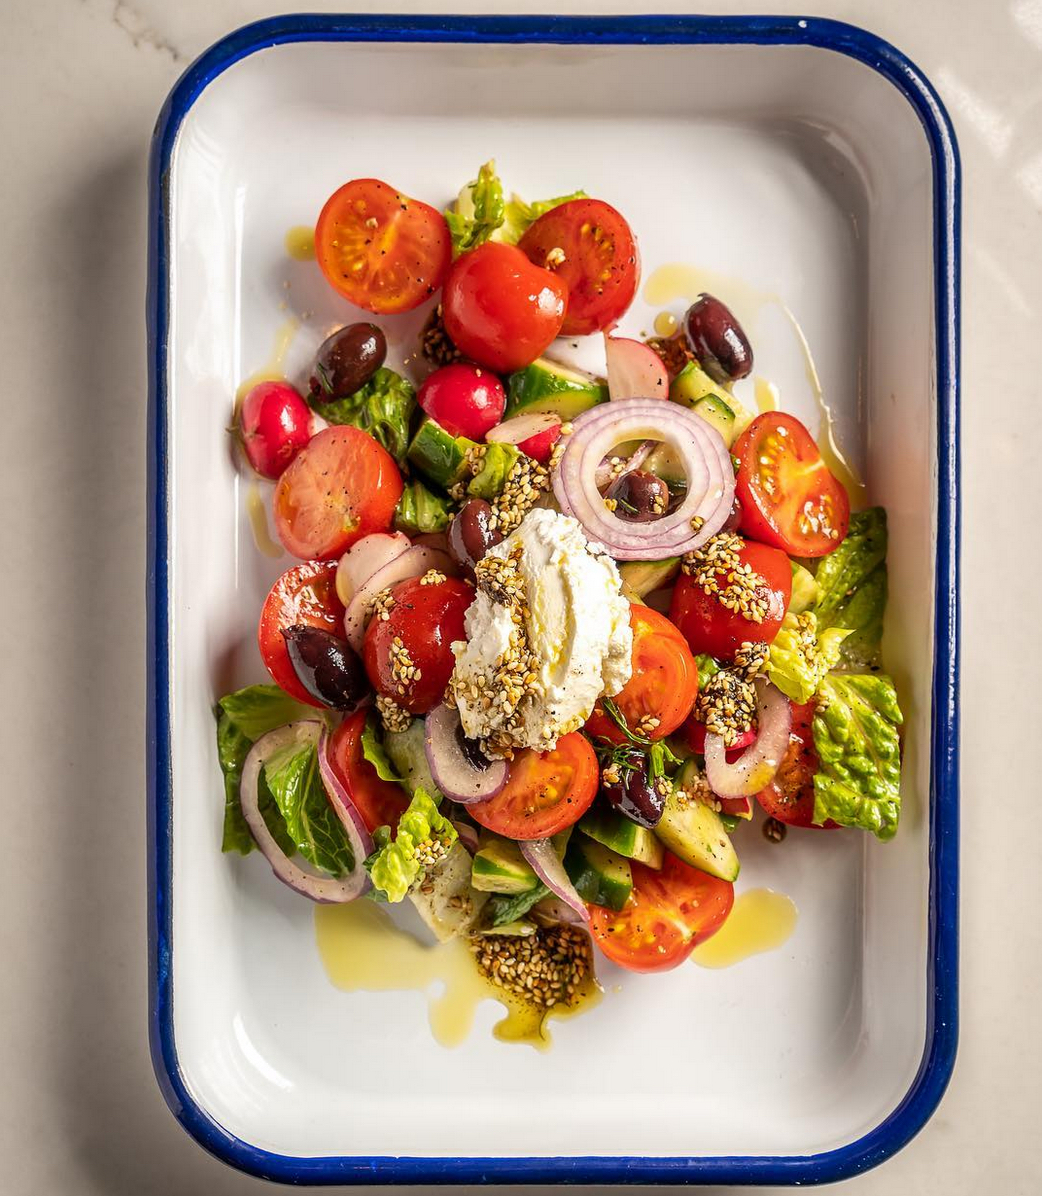 Kibbutz Salad – from Mint Kitchen’s Instagram account